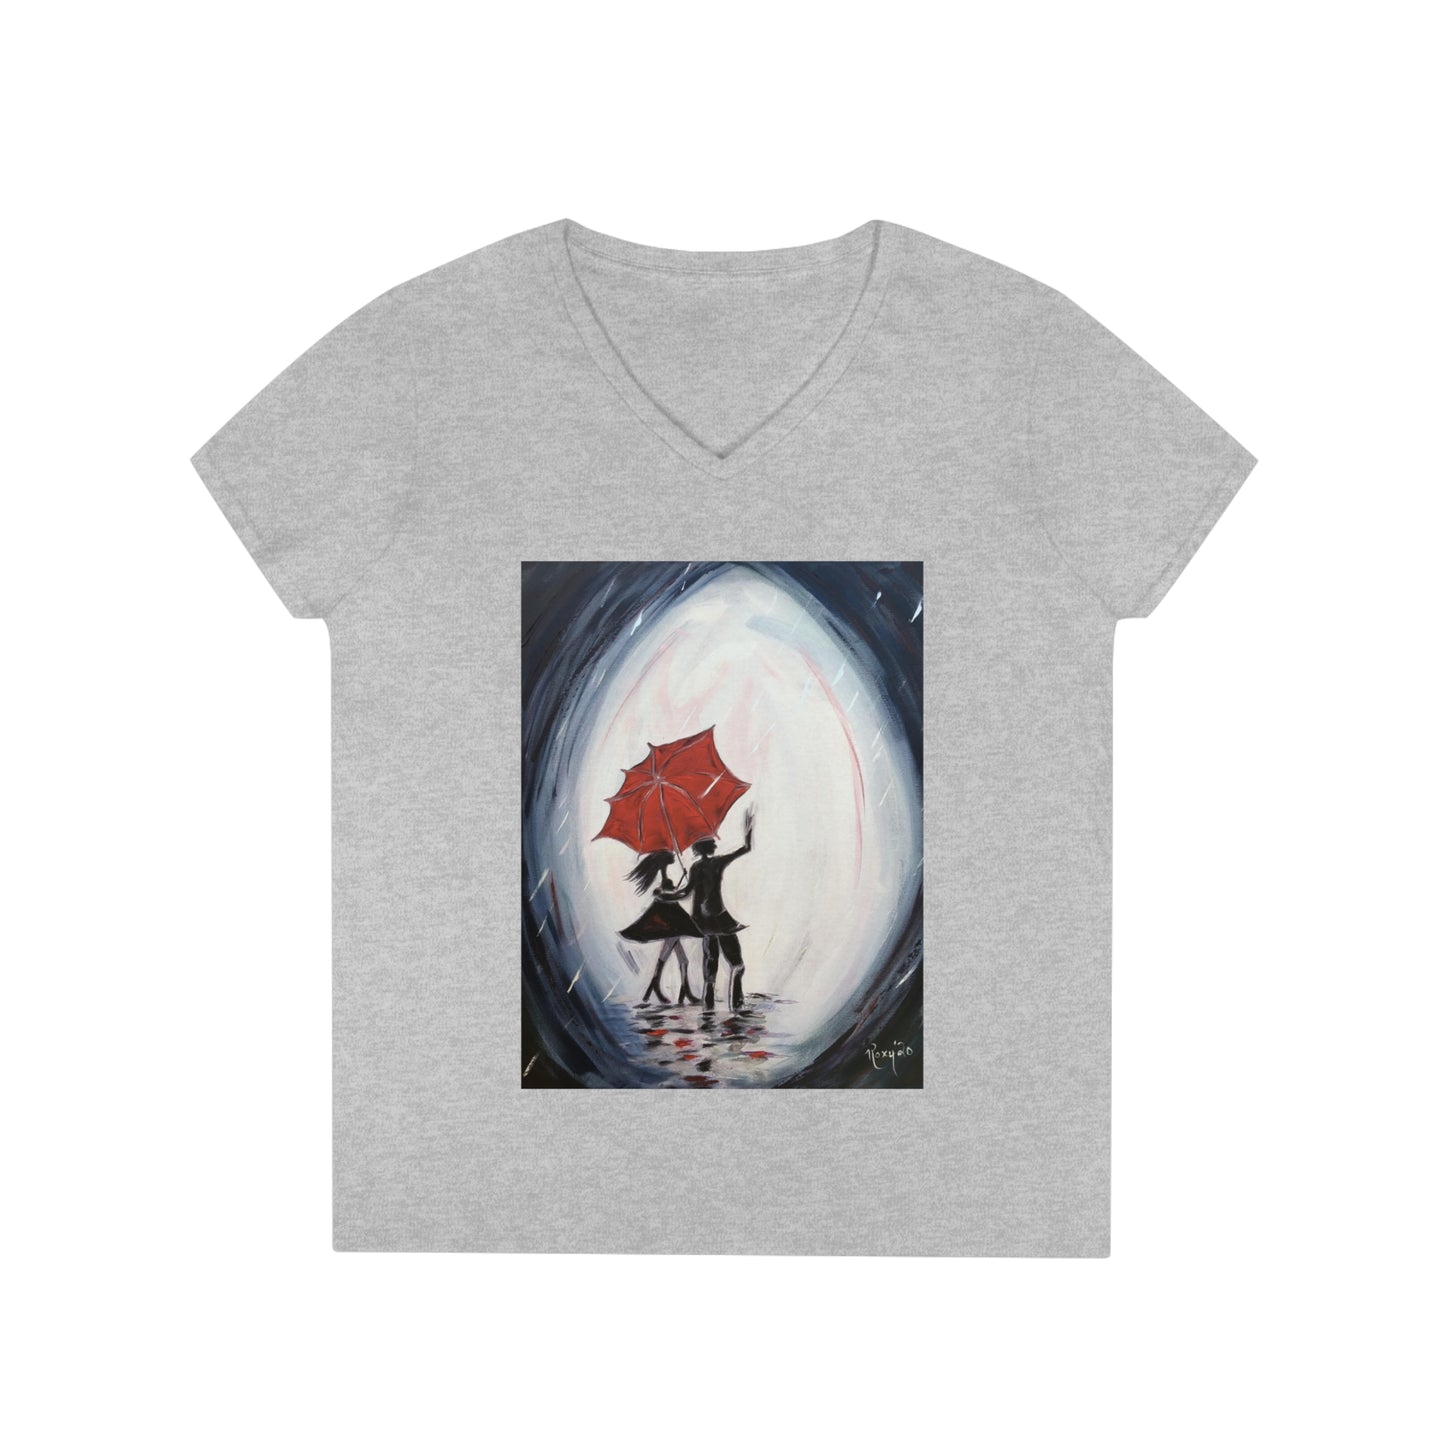 Romantic Couple in Paris "Walking in the Rain" Ladies' V-Neck T-Shirt